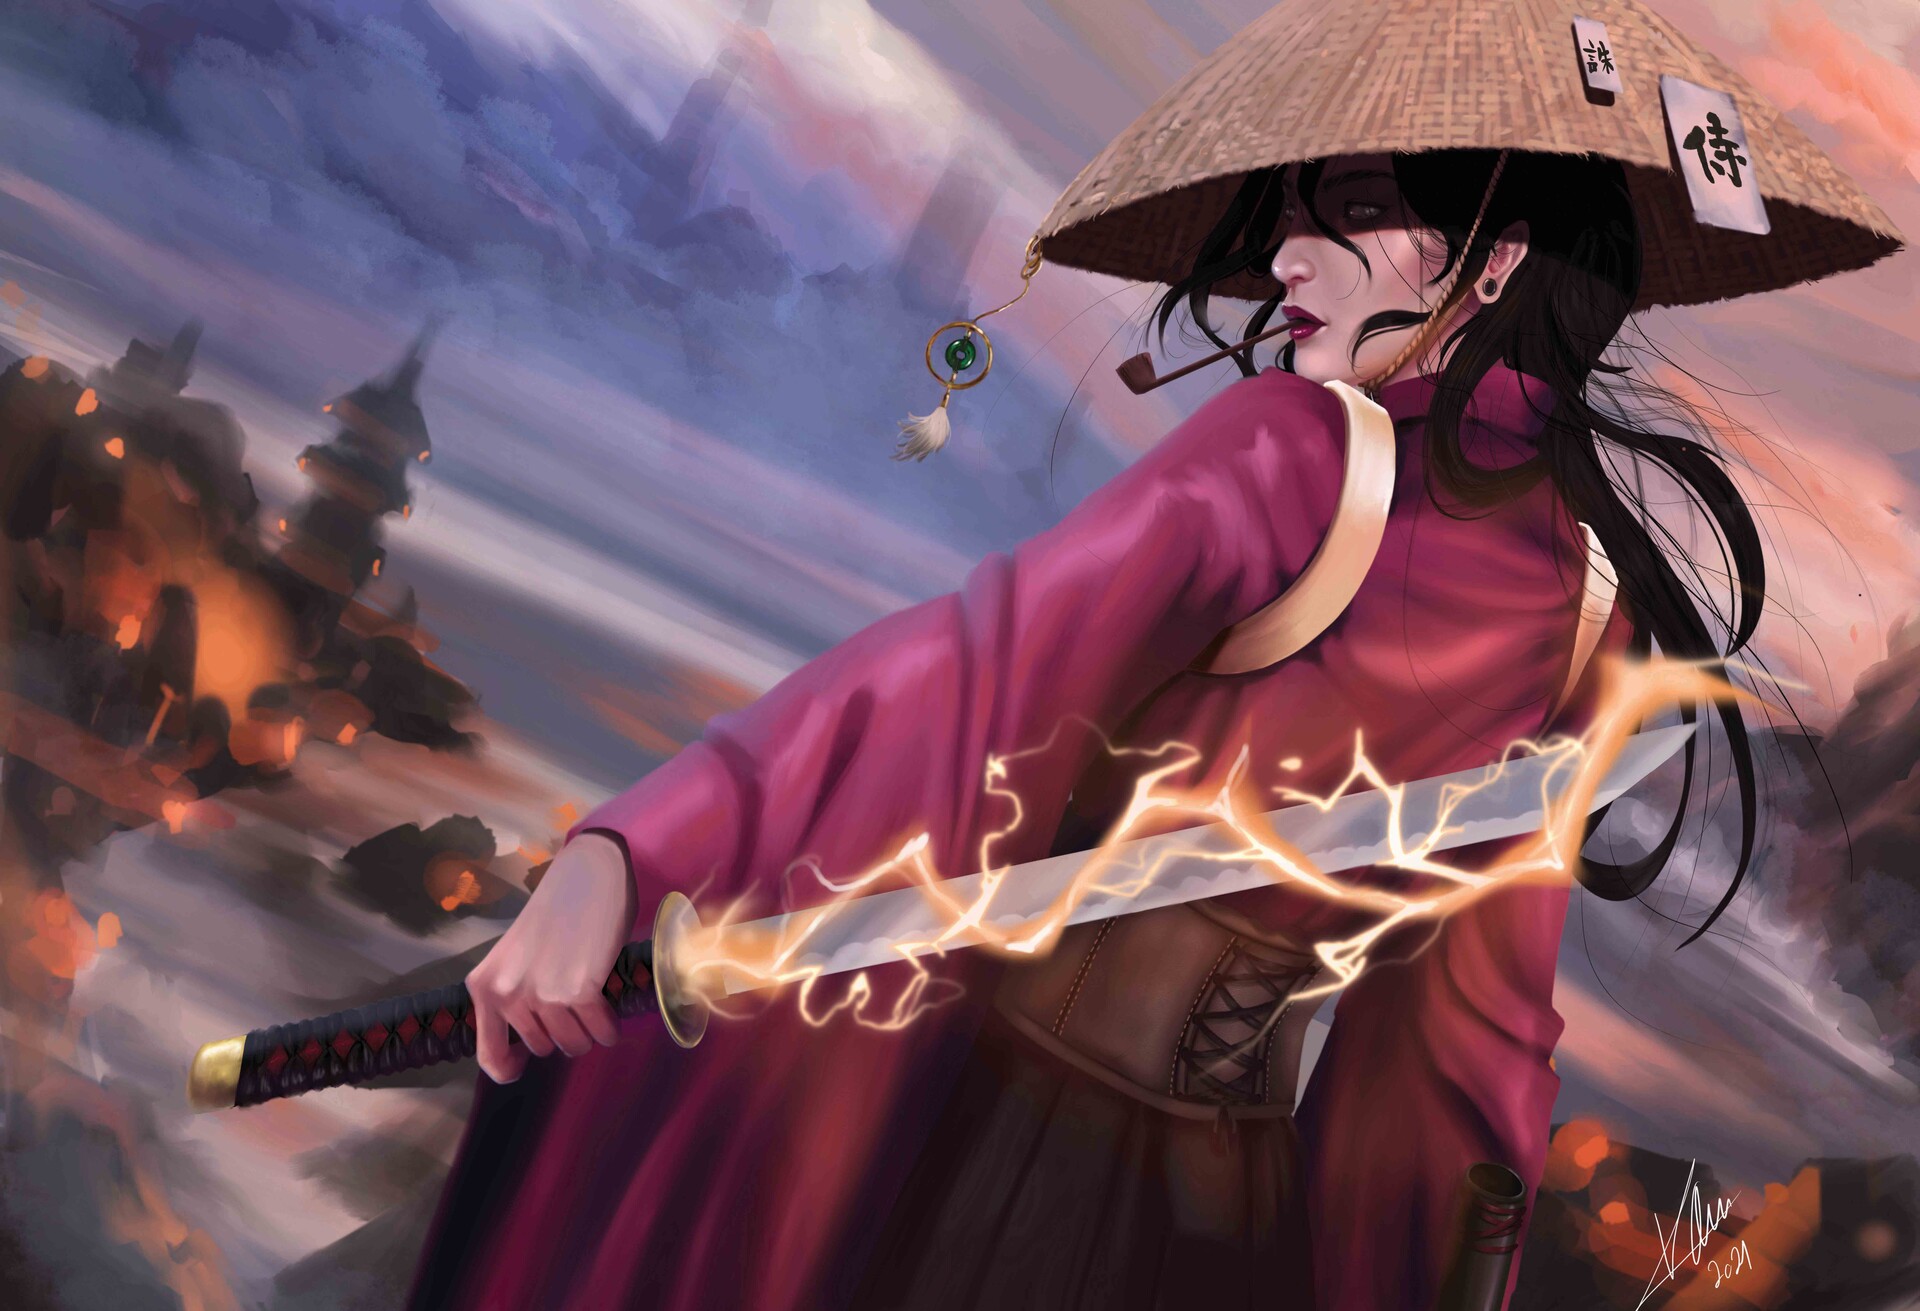 Samurai Smoking Pipe Women With Hats Sword Hat Dark Hair Back Women Digital Art Women With Swords Dr 1920x1311